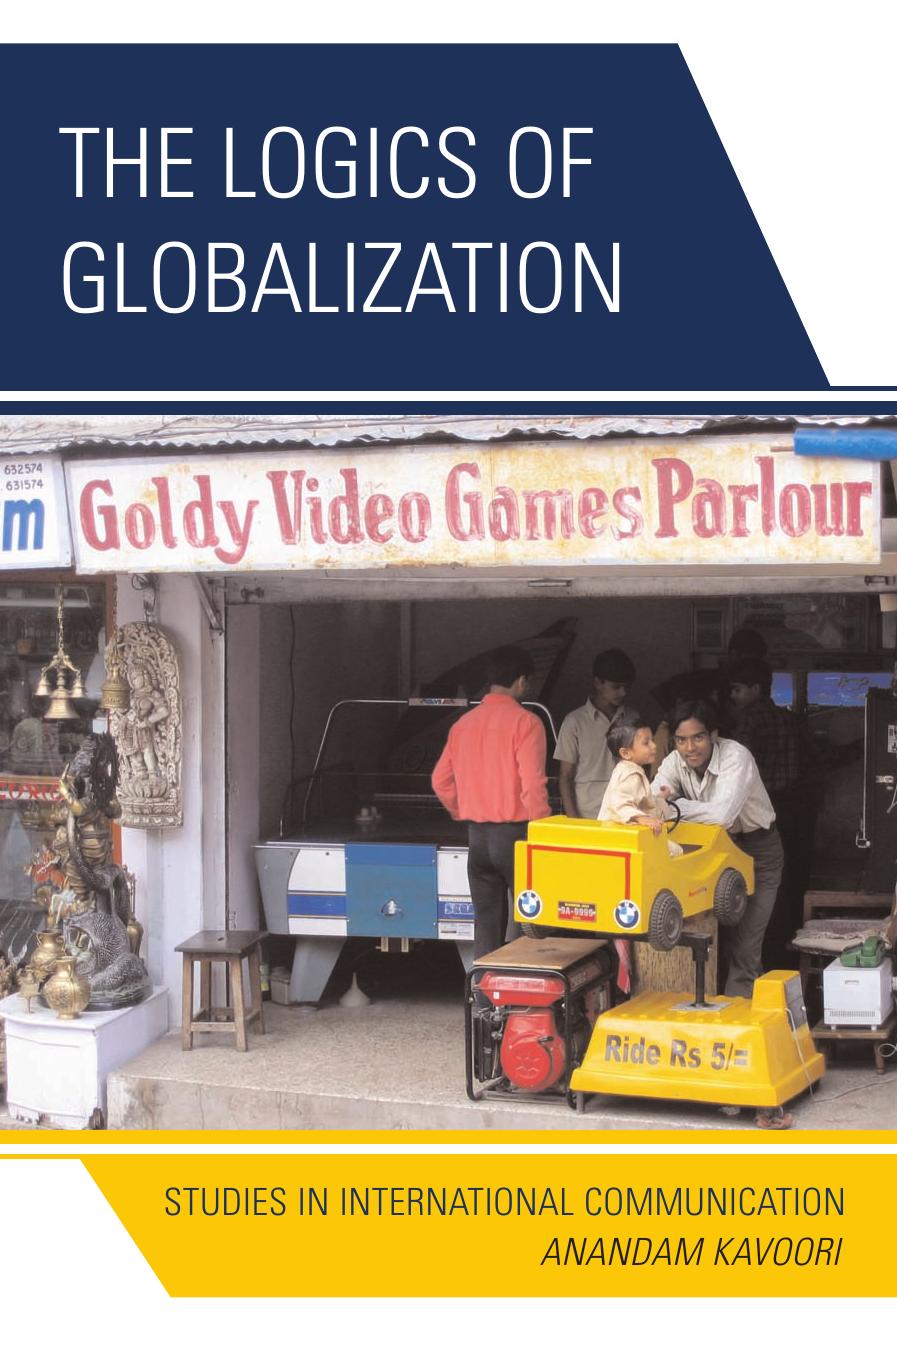 [Anandam Kavoori] Logics of Globalization Studies 2009